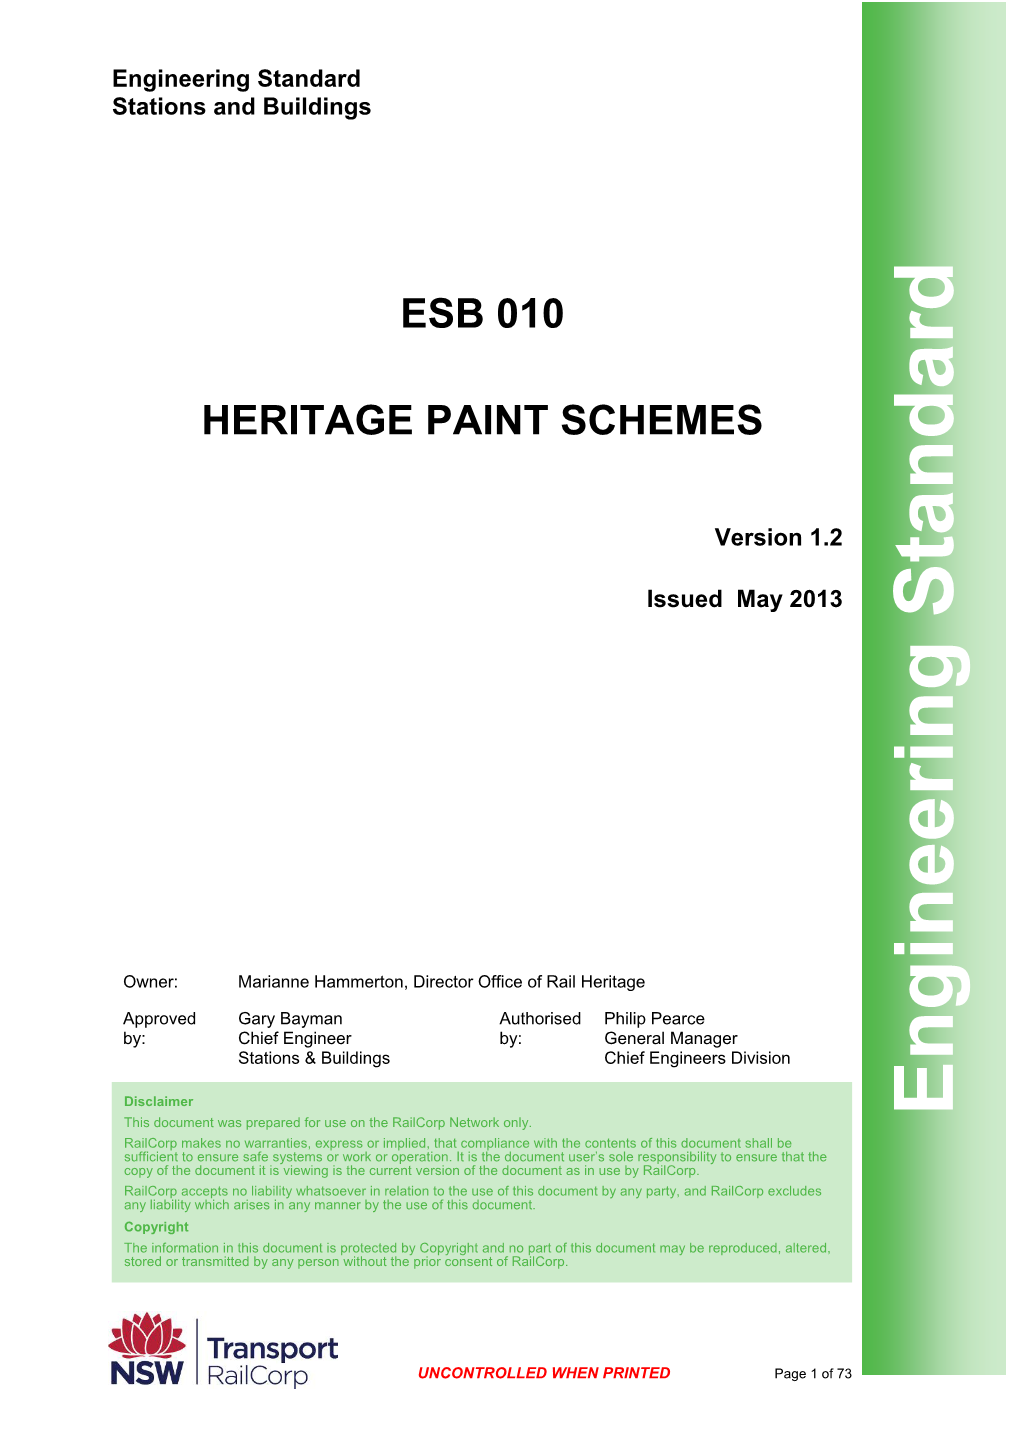 ESB 010 Heritage Paint Schemes